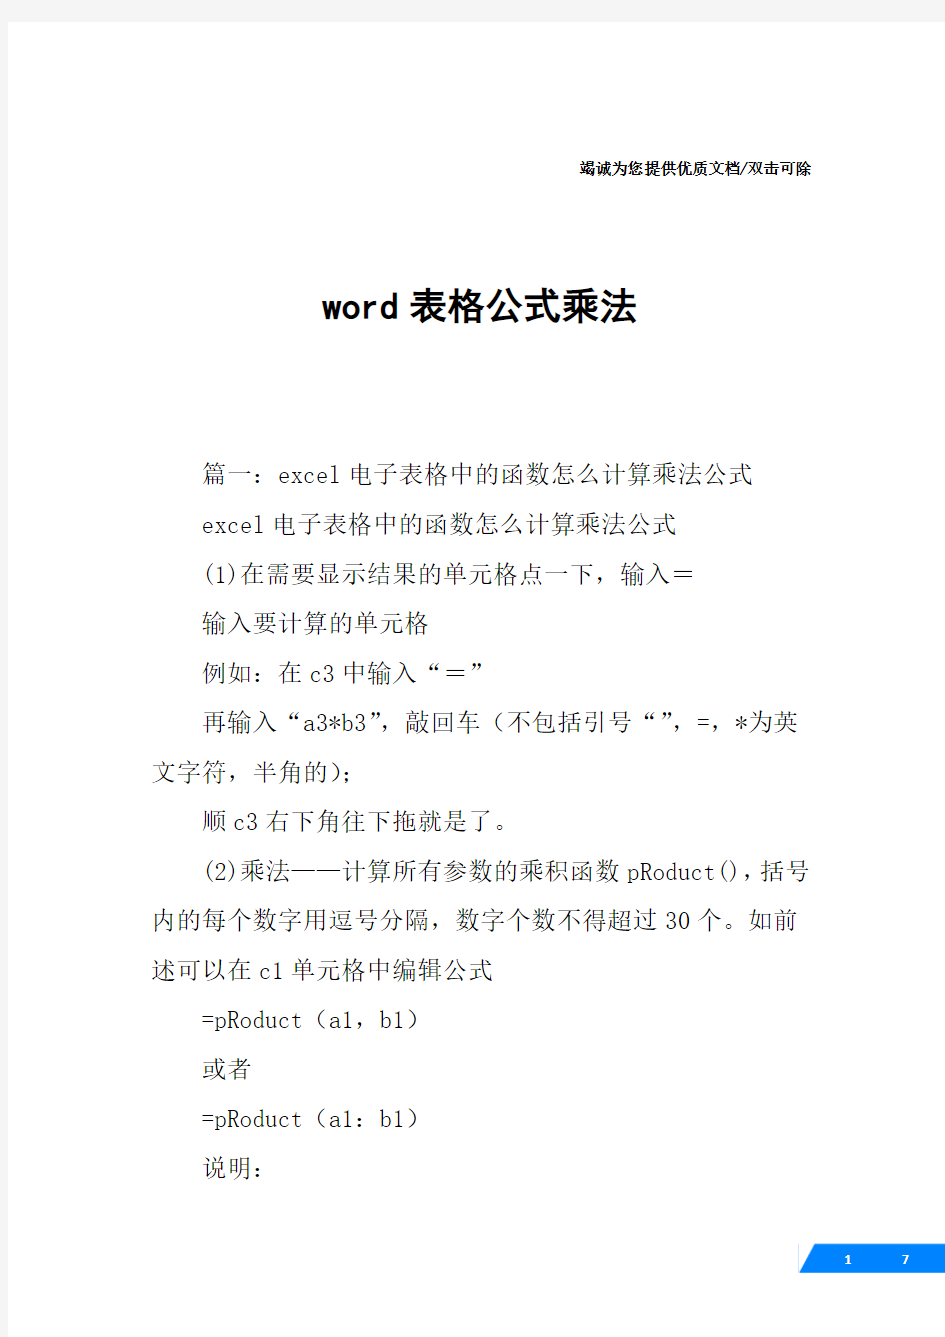 word表格公式乘法